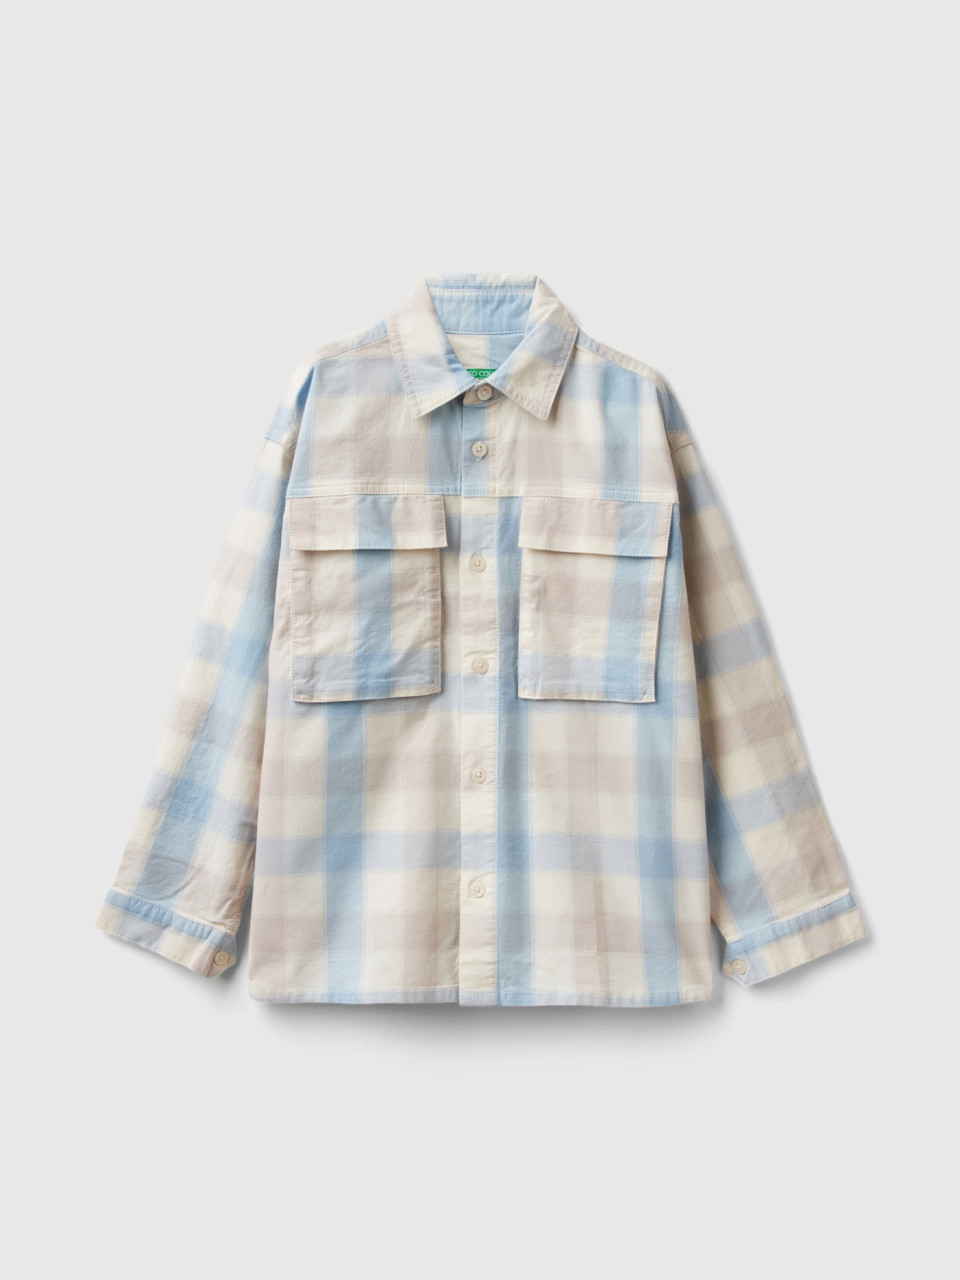 Benetton, Check Shirt In Stretch Cotton, Light Blue, Kids